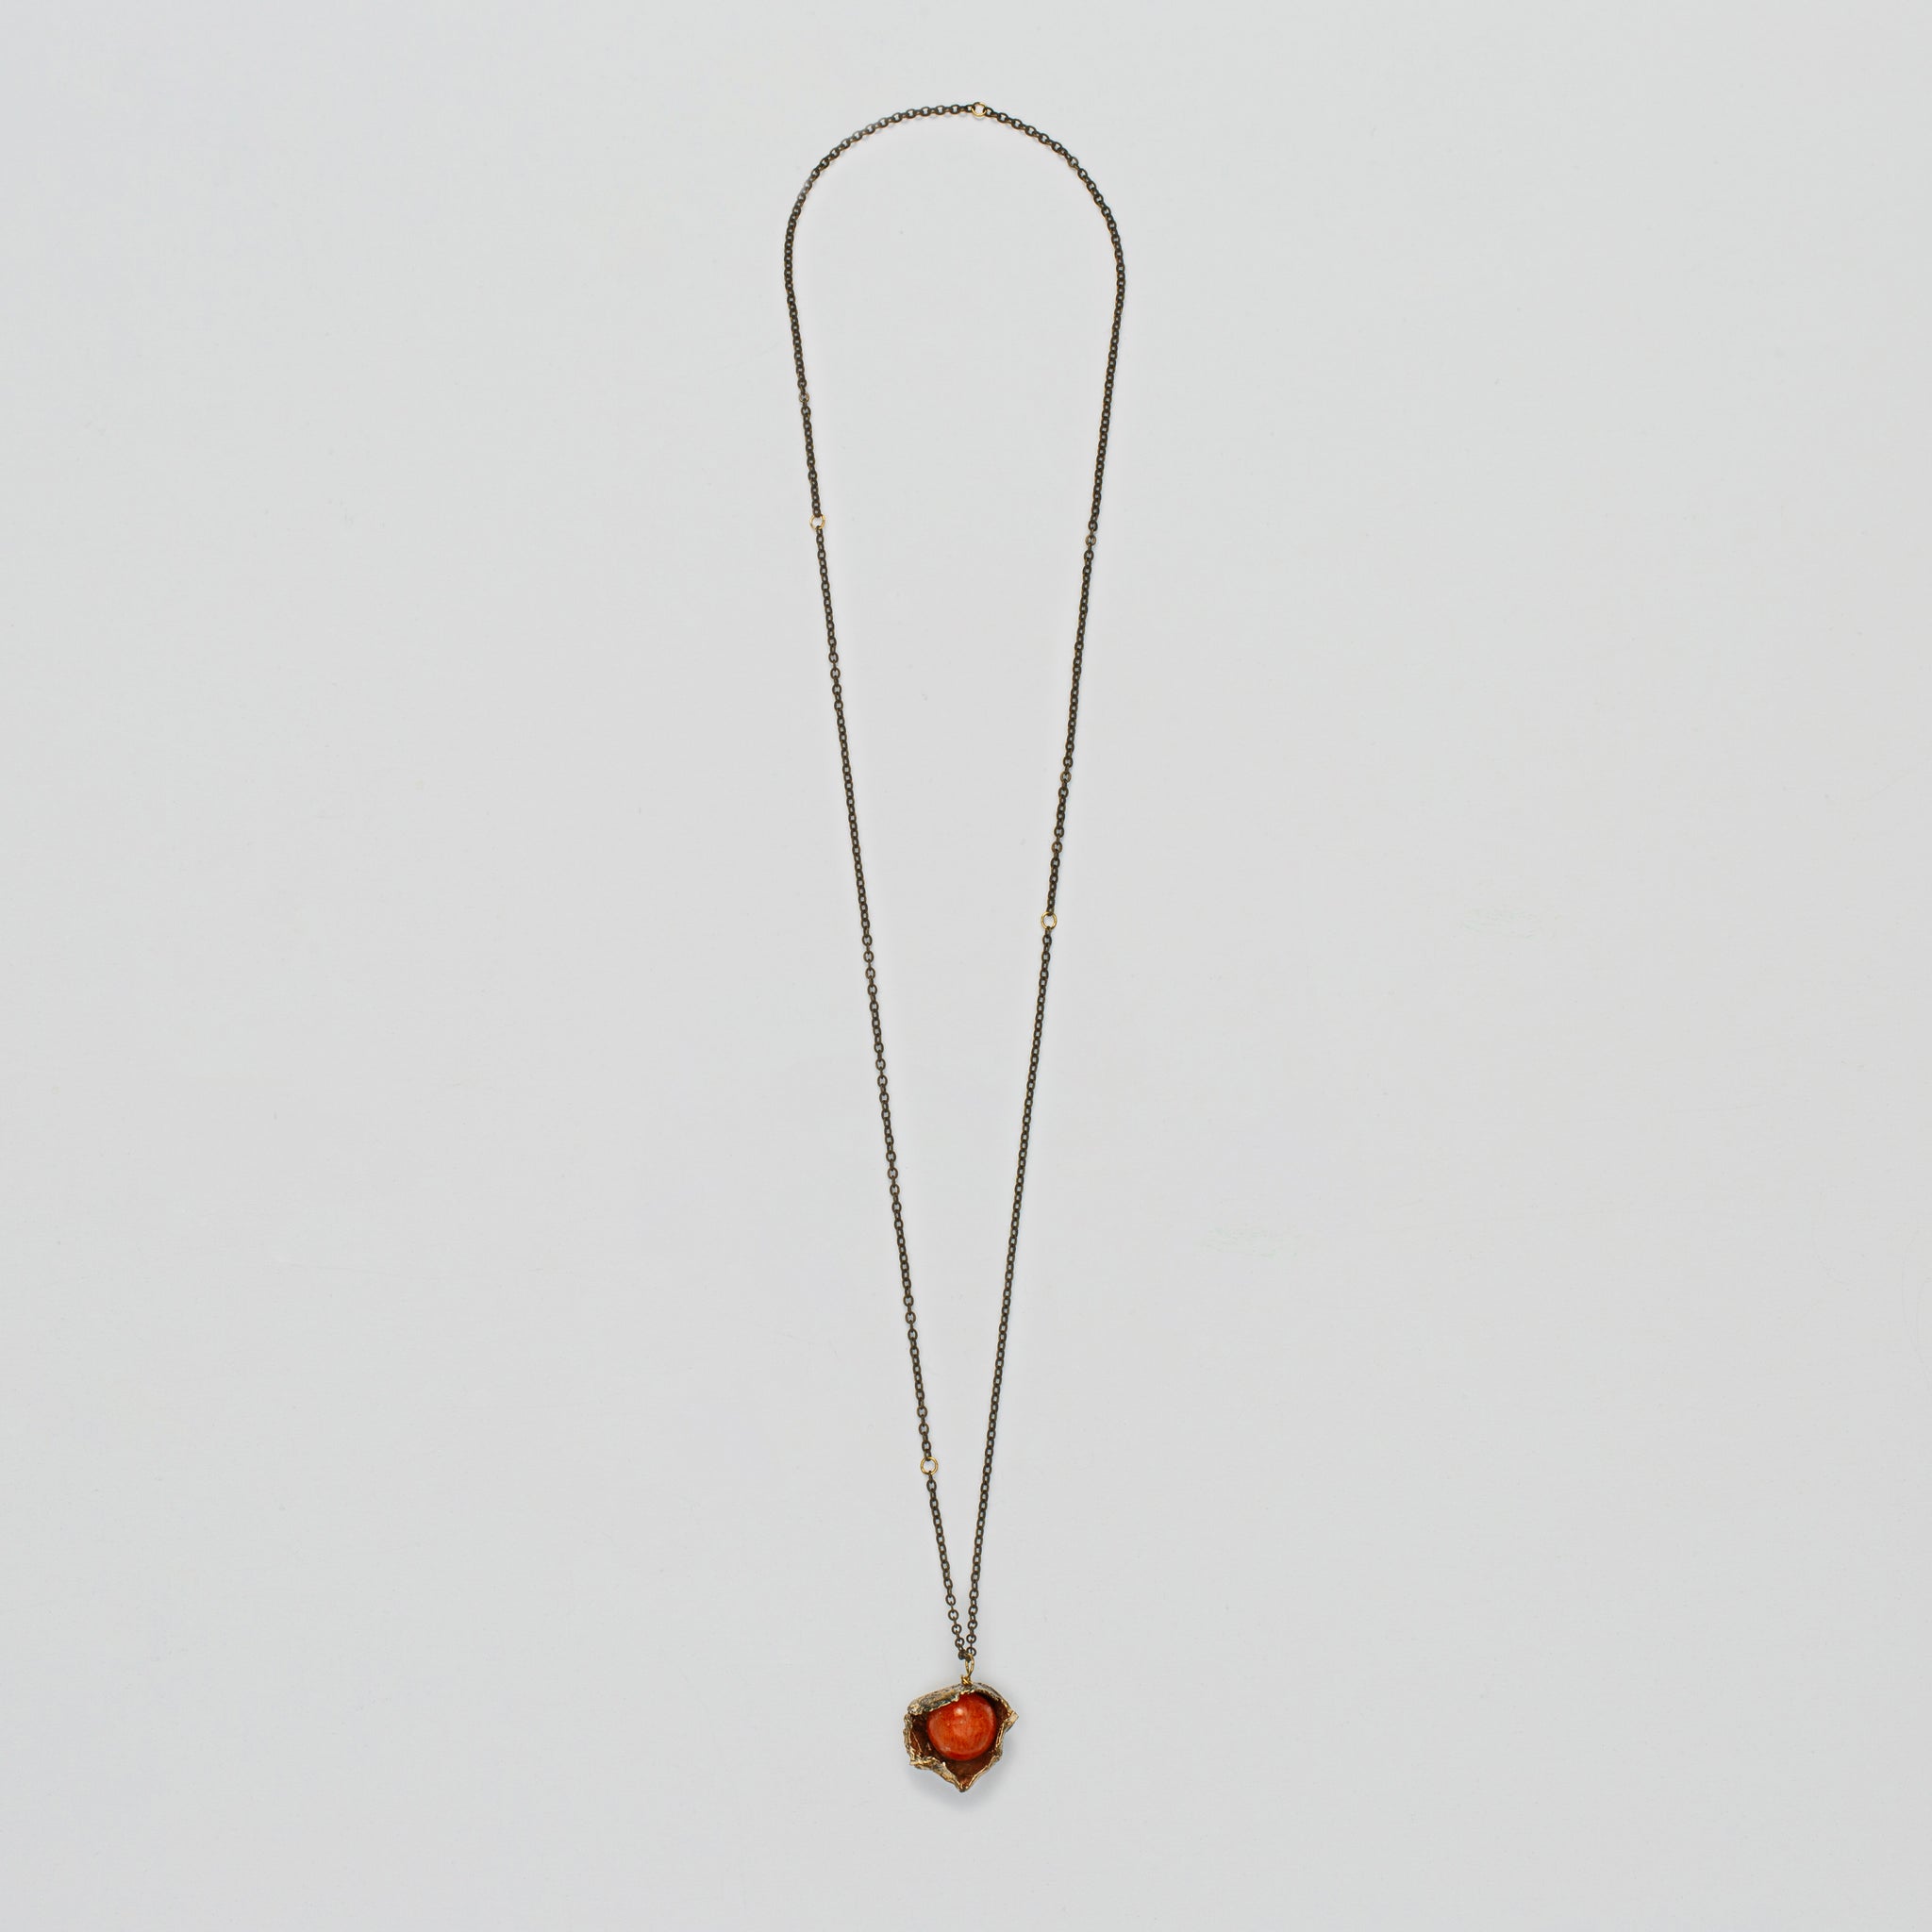 Capsule Necklace in Bronze and Orange Jade